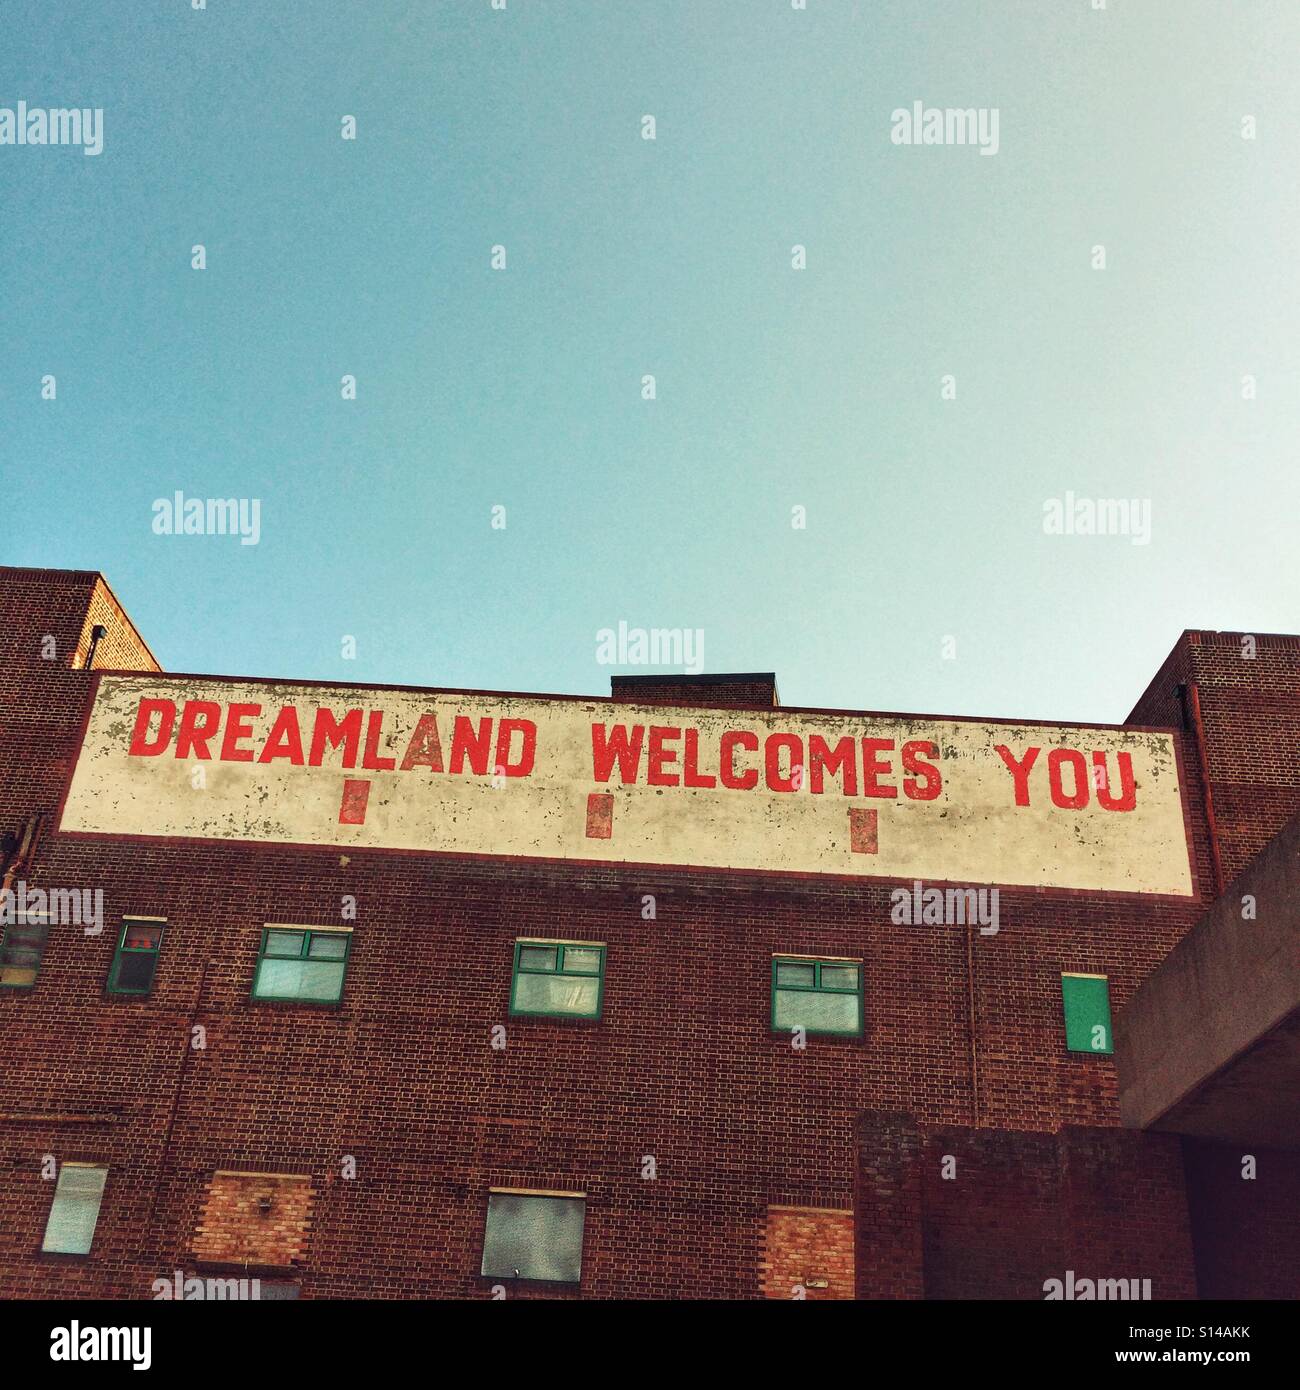 Dreamland Welcomes You - Margate England UK Stock Photo